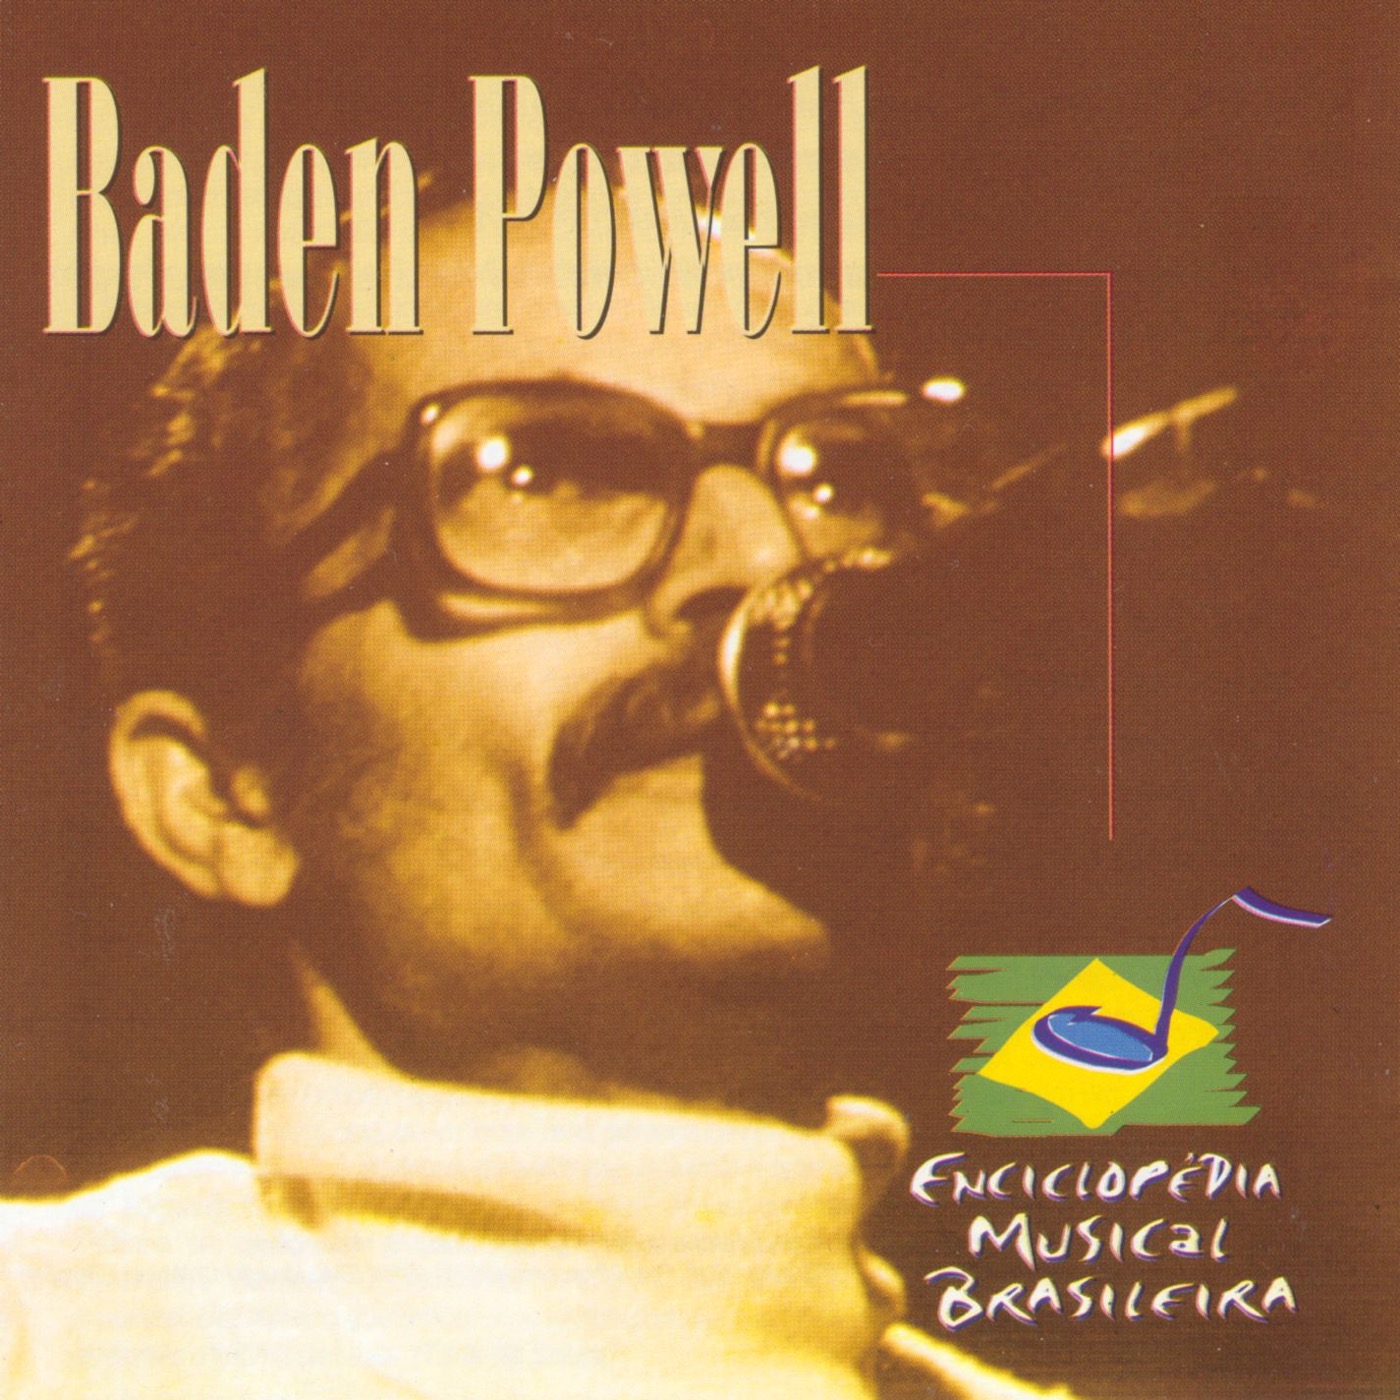 Baden Powell Discography